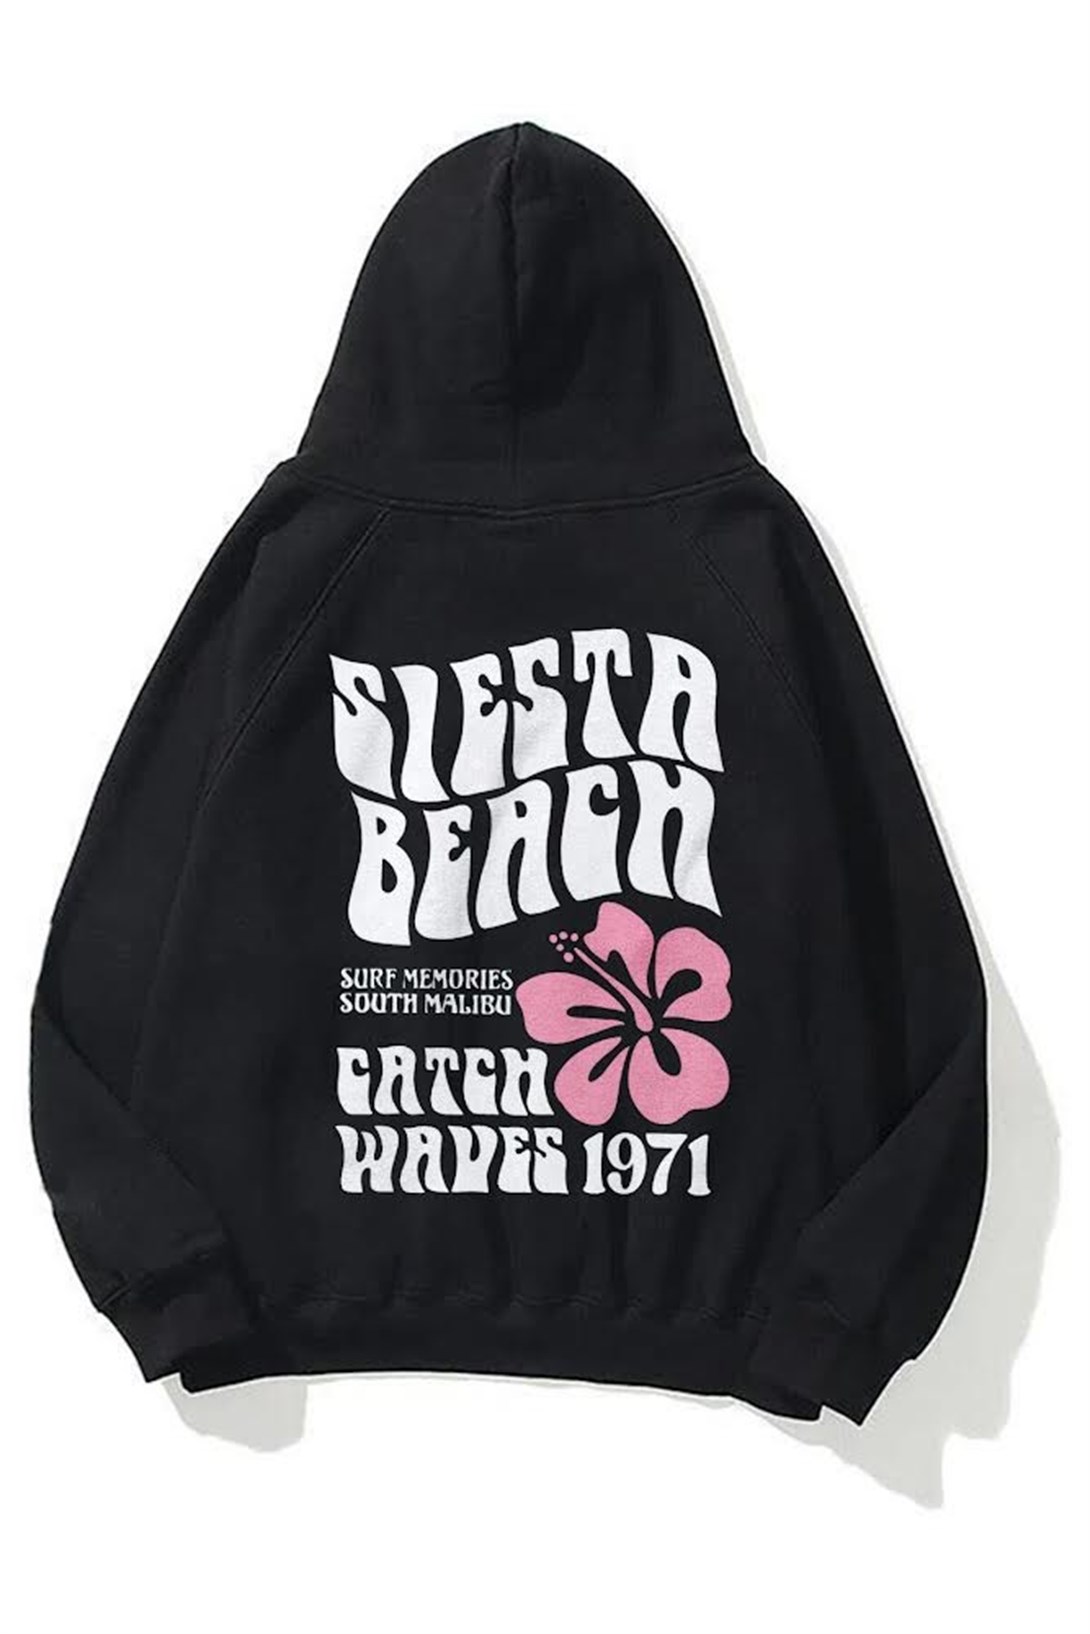 Trendiz Unisex Siesta Beach Sweatshirt